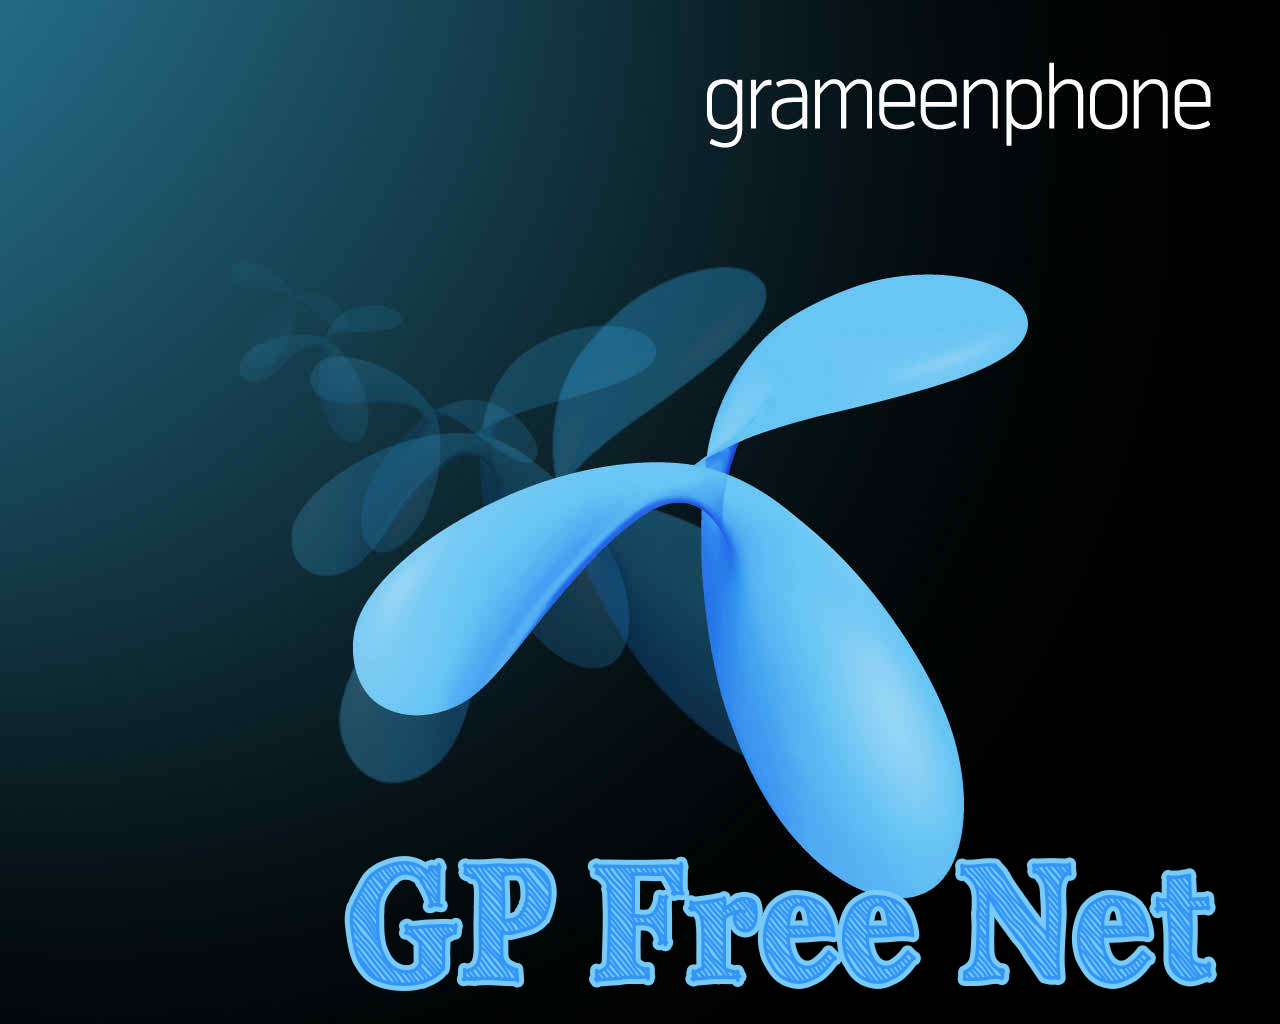 GP free net একদম নতুন server দিয়ে এই পস্ট ২য় বার কেও করবেন না। সকল সমস্যা আমি নিজেই update করে দিবো ইনশাআল্লাহ…….. by NABI